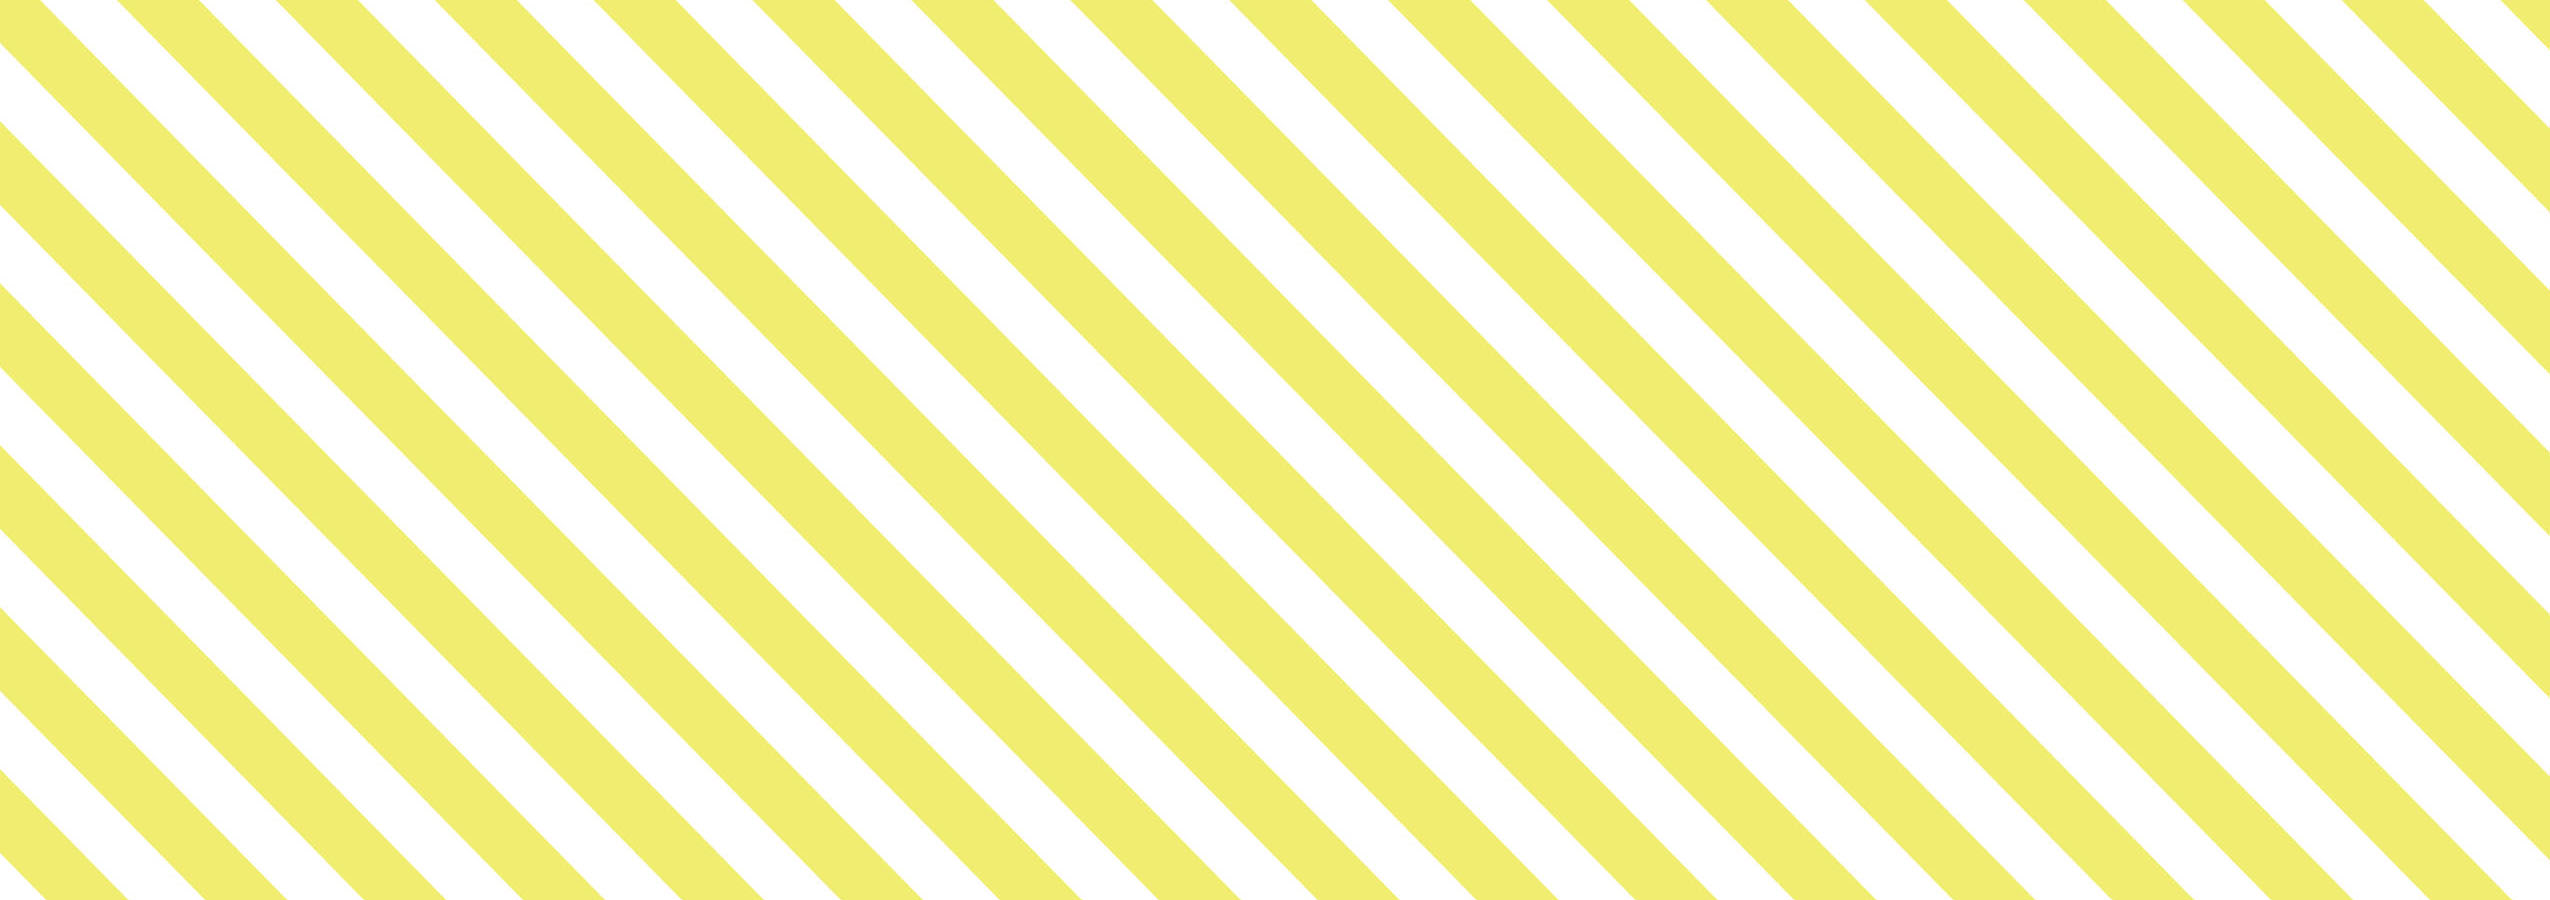 High Resolution Wallpaper | Yellow Stripes 2550x900 px